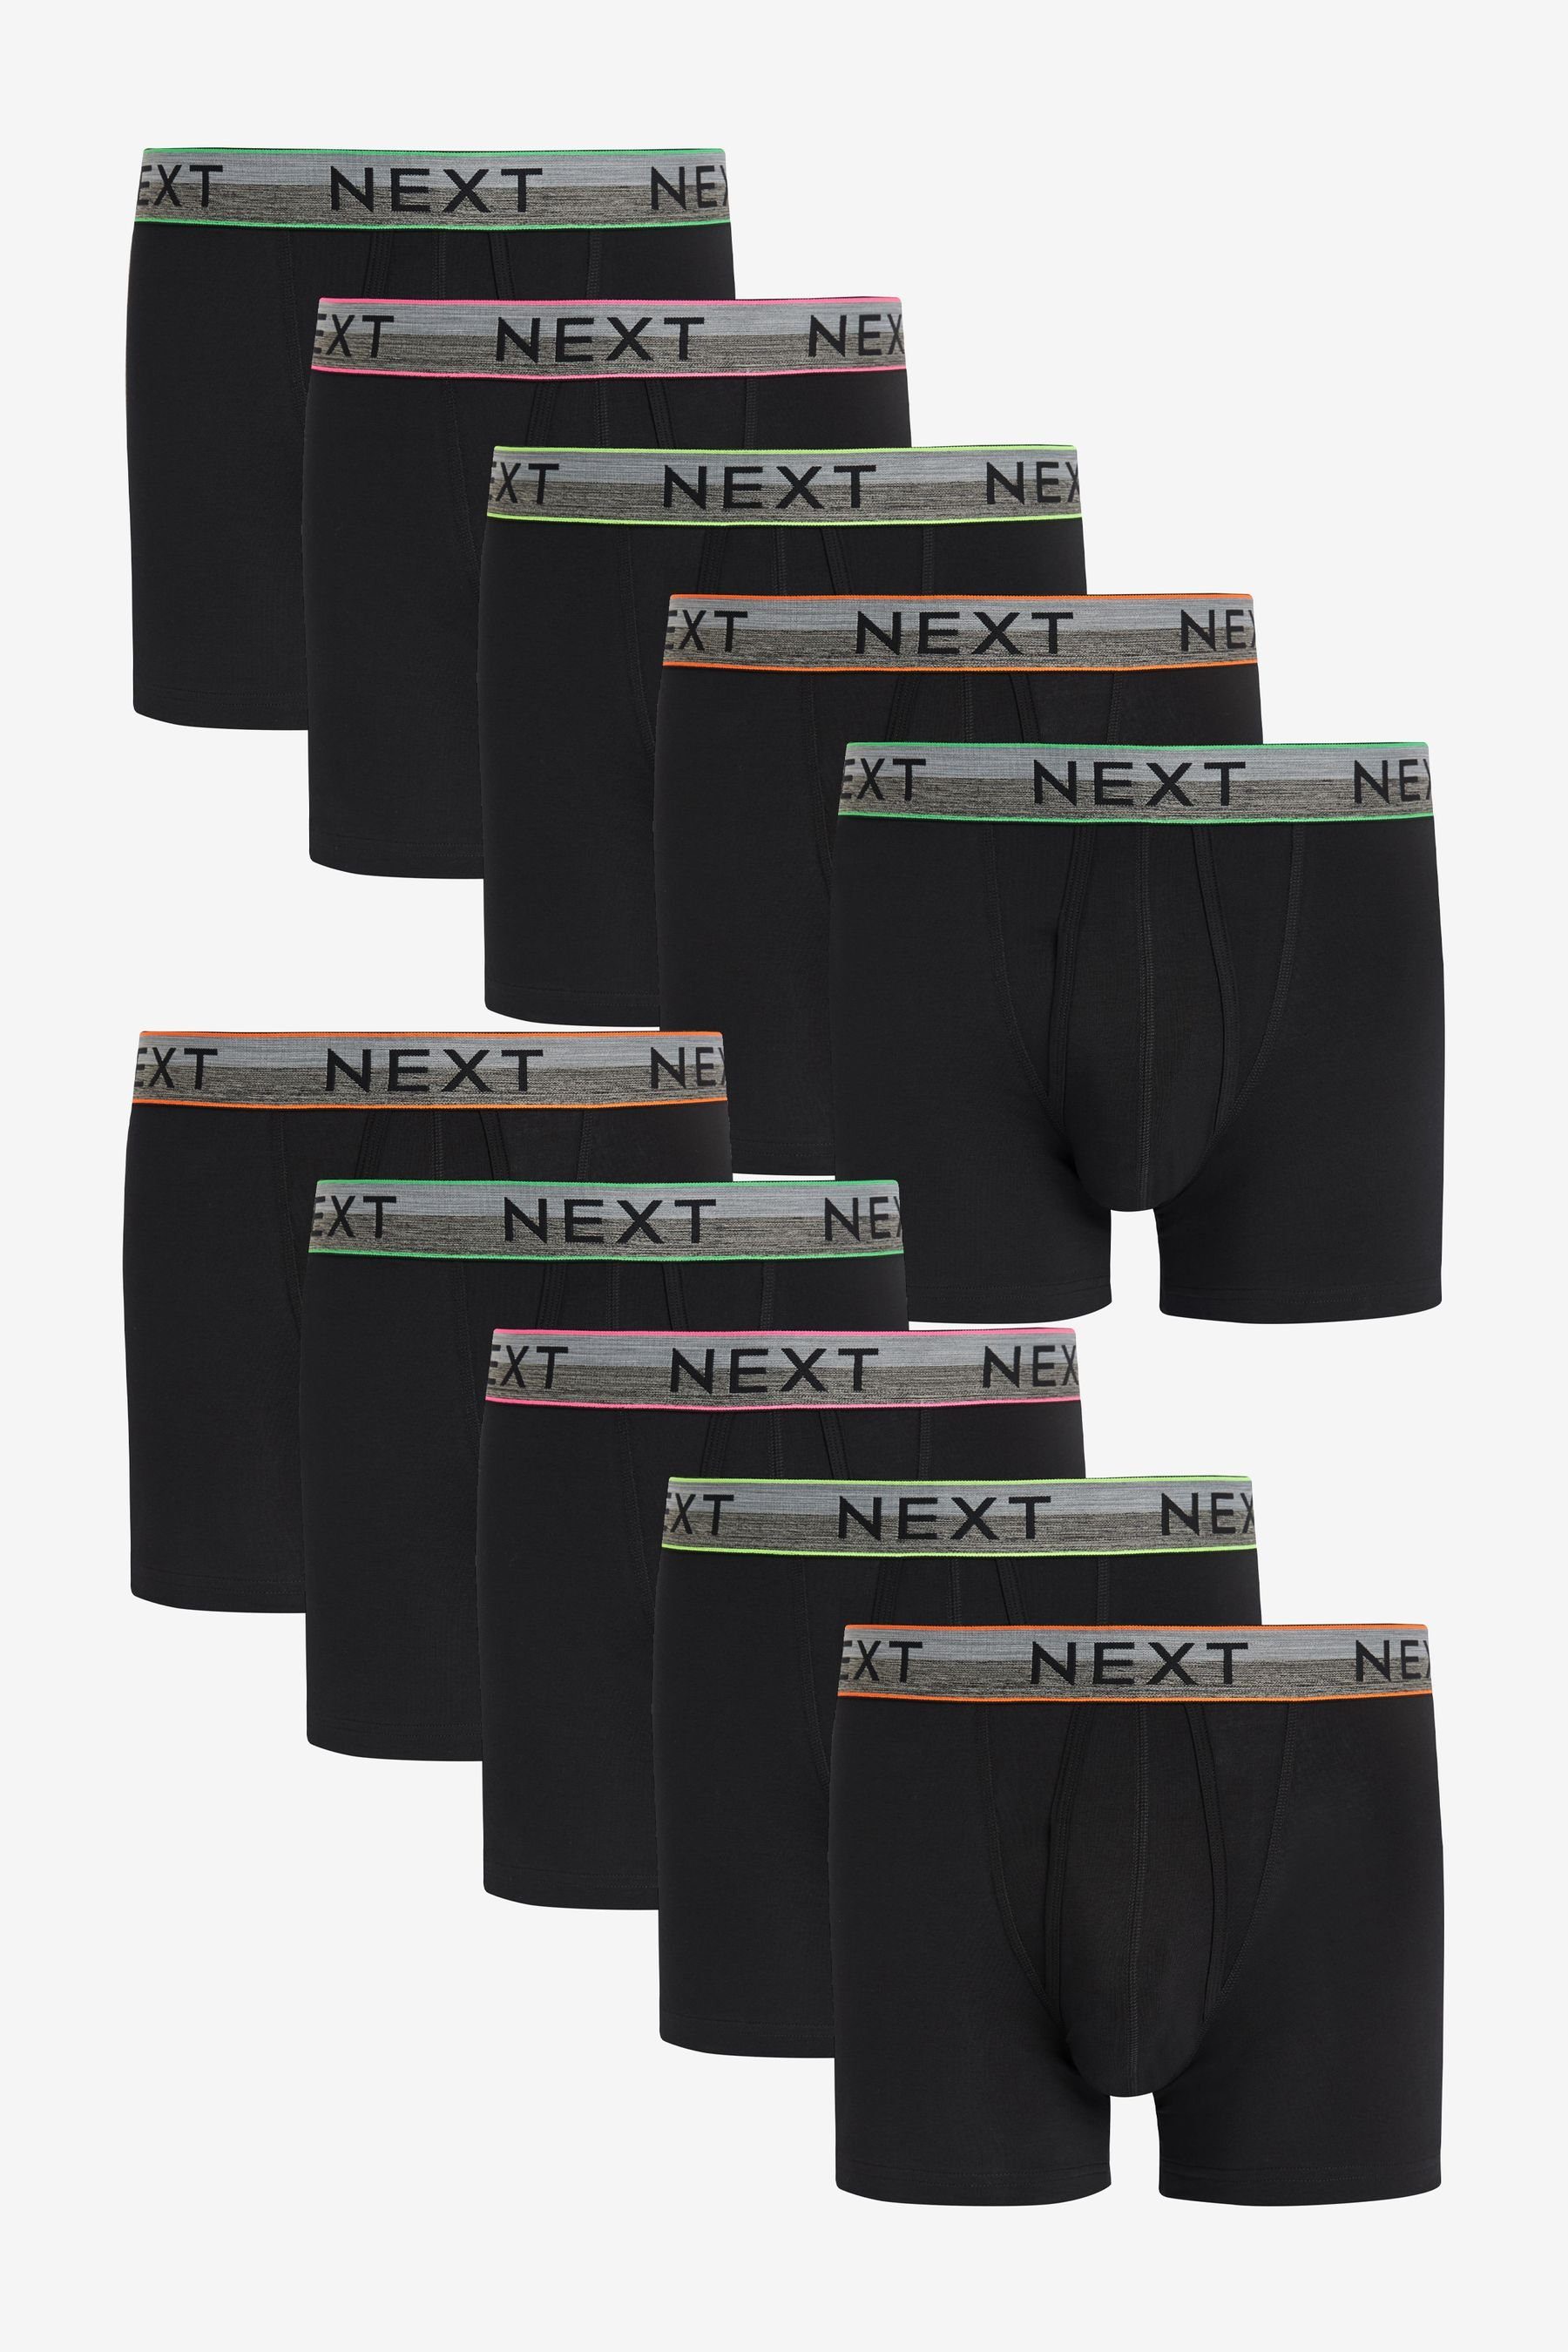 A-Front, Boxershorts 10er-Pack (10-St) Marl Neon Waistband Next Boxershorts Black